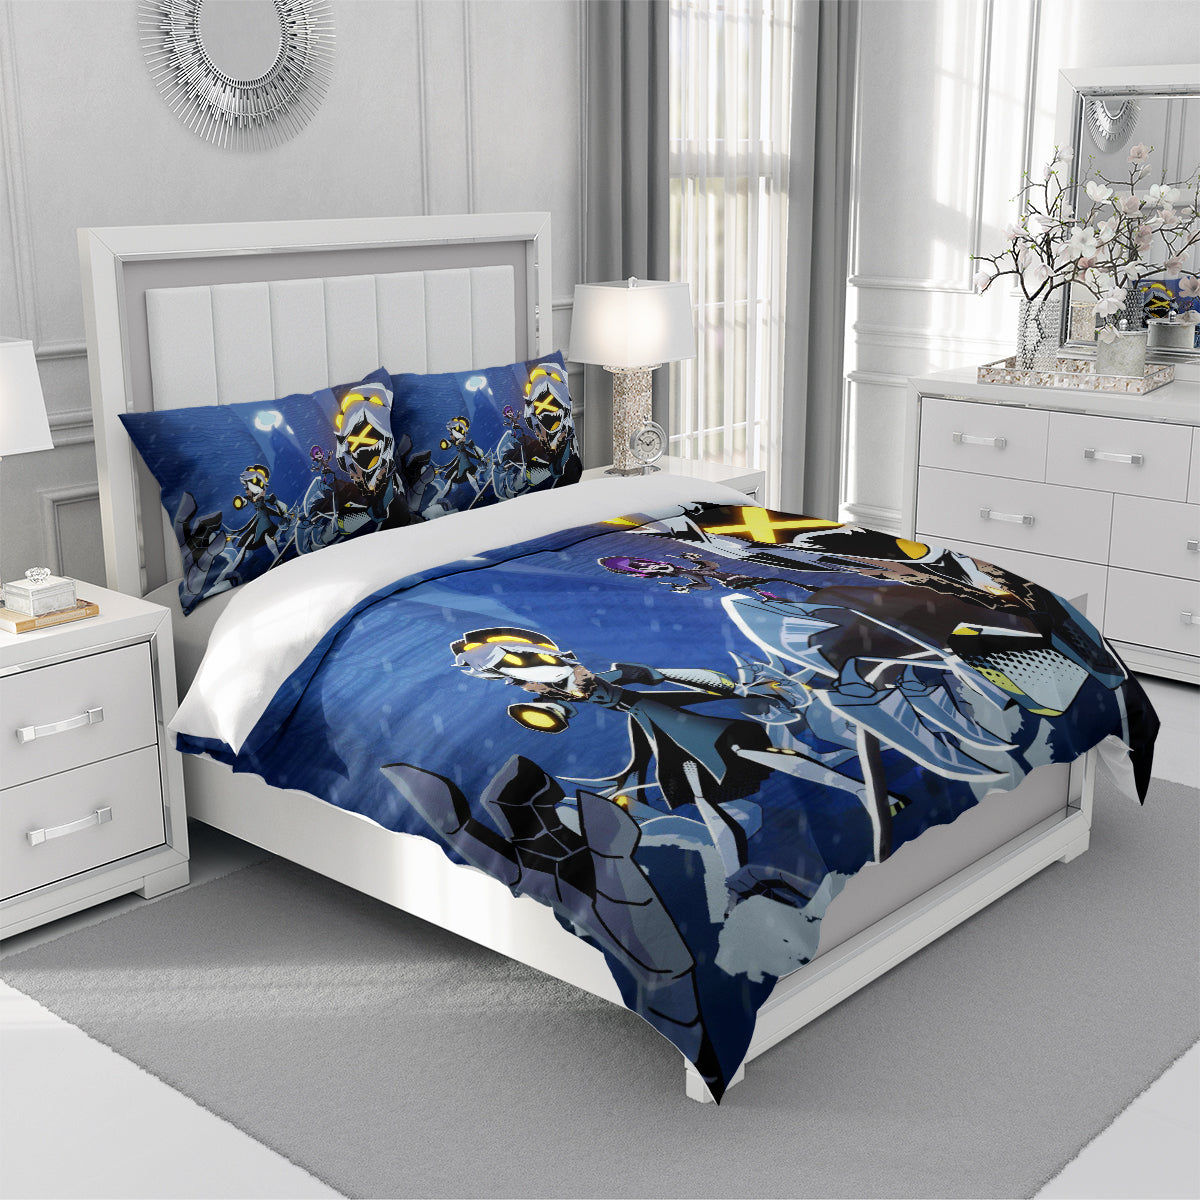 Murder Drones #11 3D Printed Duvet Cover Quilt Cover Pillowcase Bedding Set Bed Linen Home Decor